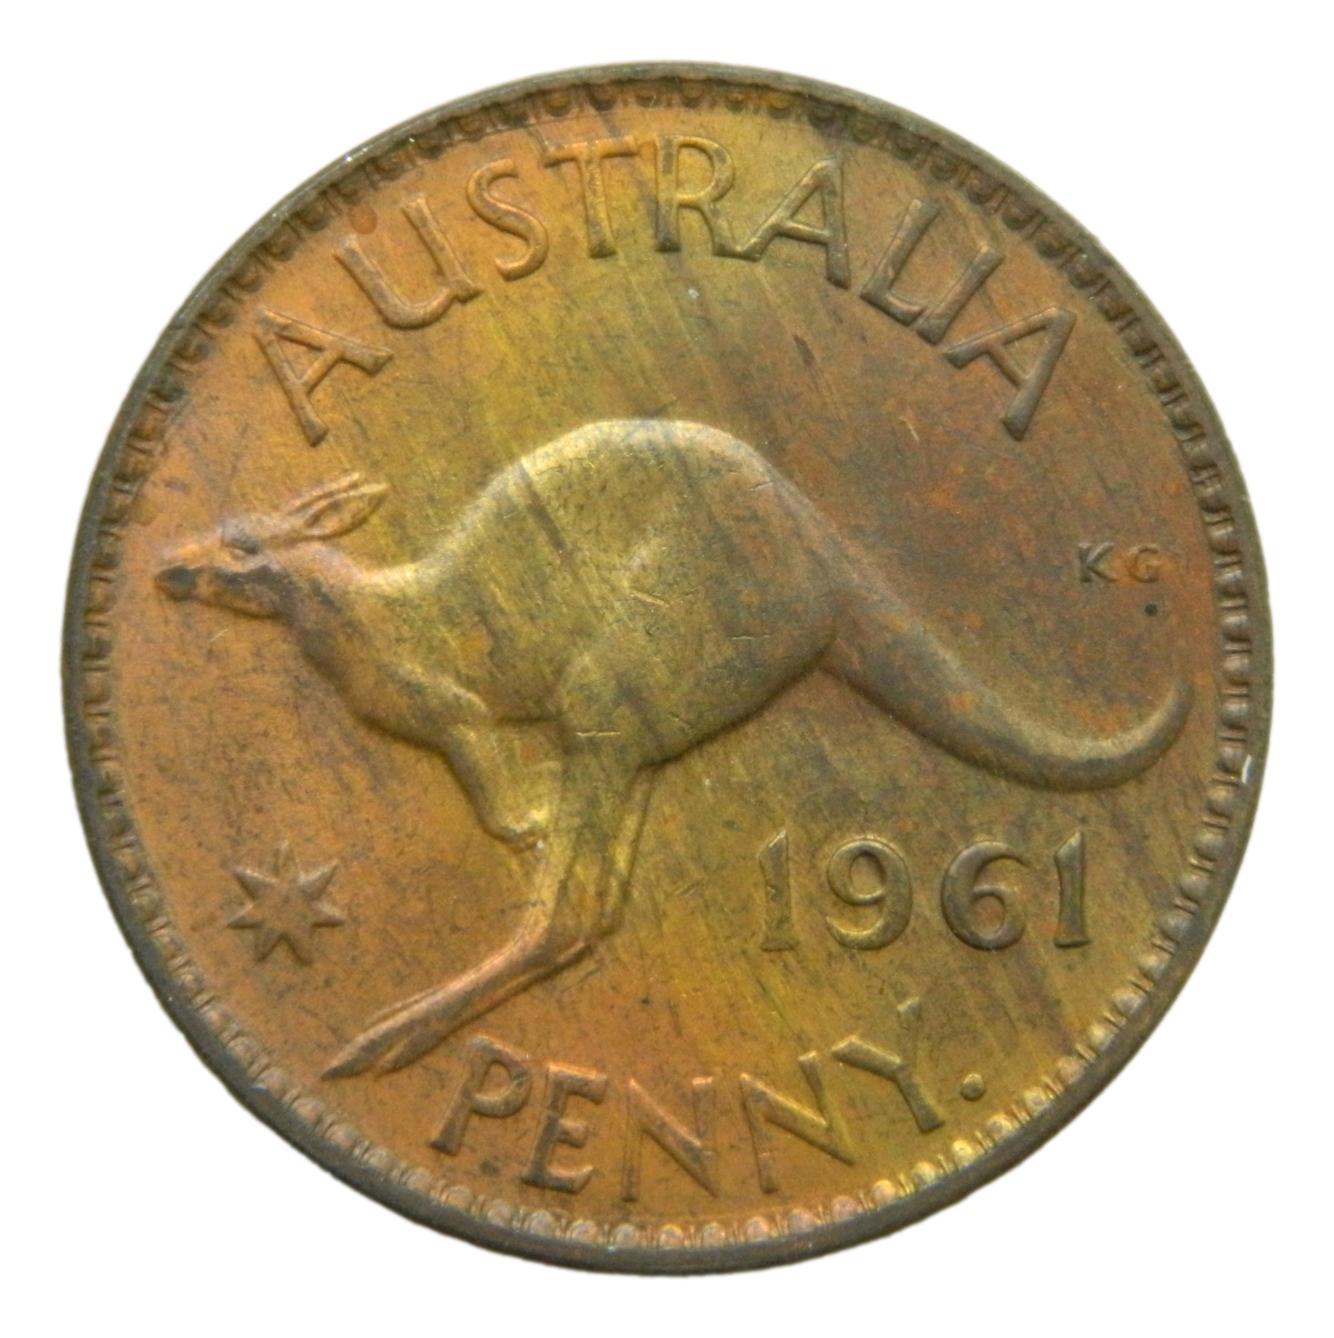 1961 - AUSTRALIA - PENNY - KM 56 - S9/533